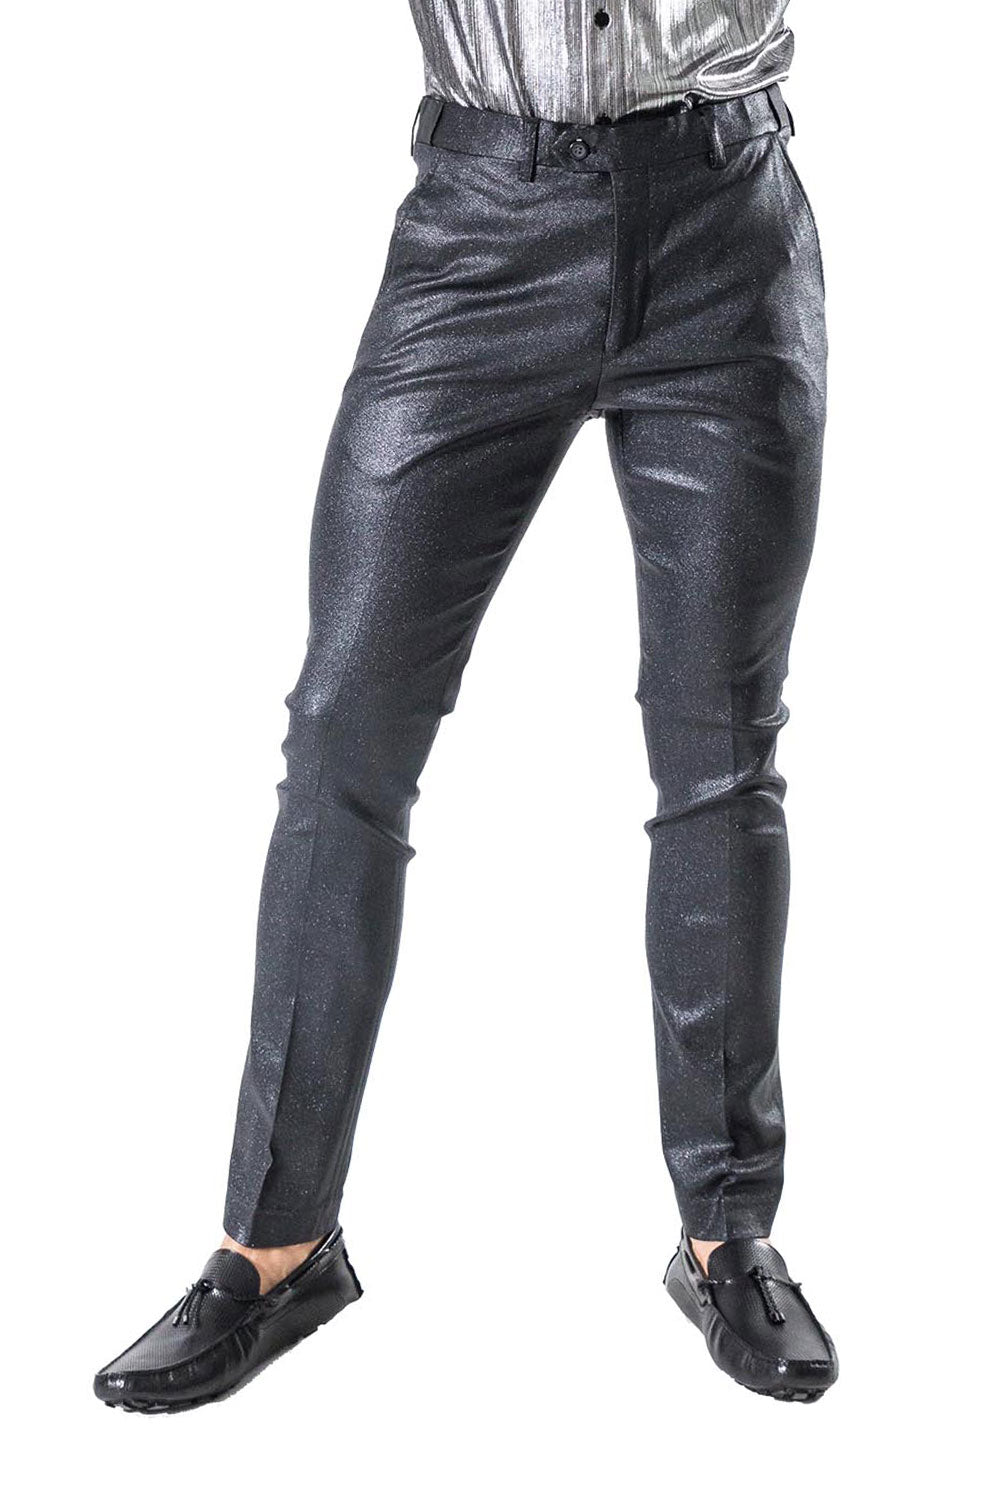 BARABAS Men Pants Profit CP015 BlackBarabas Men's Shiny Leather Nylon Button Fastening Stretch Slim Fit Pants CP015